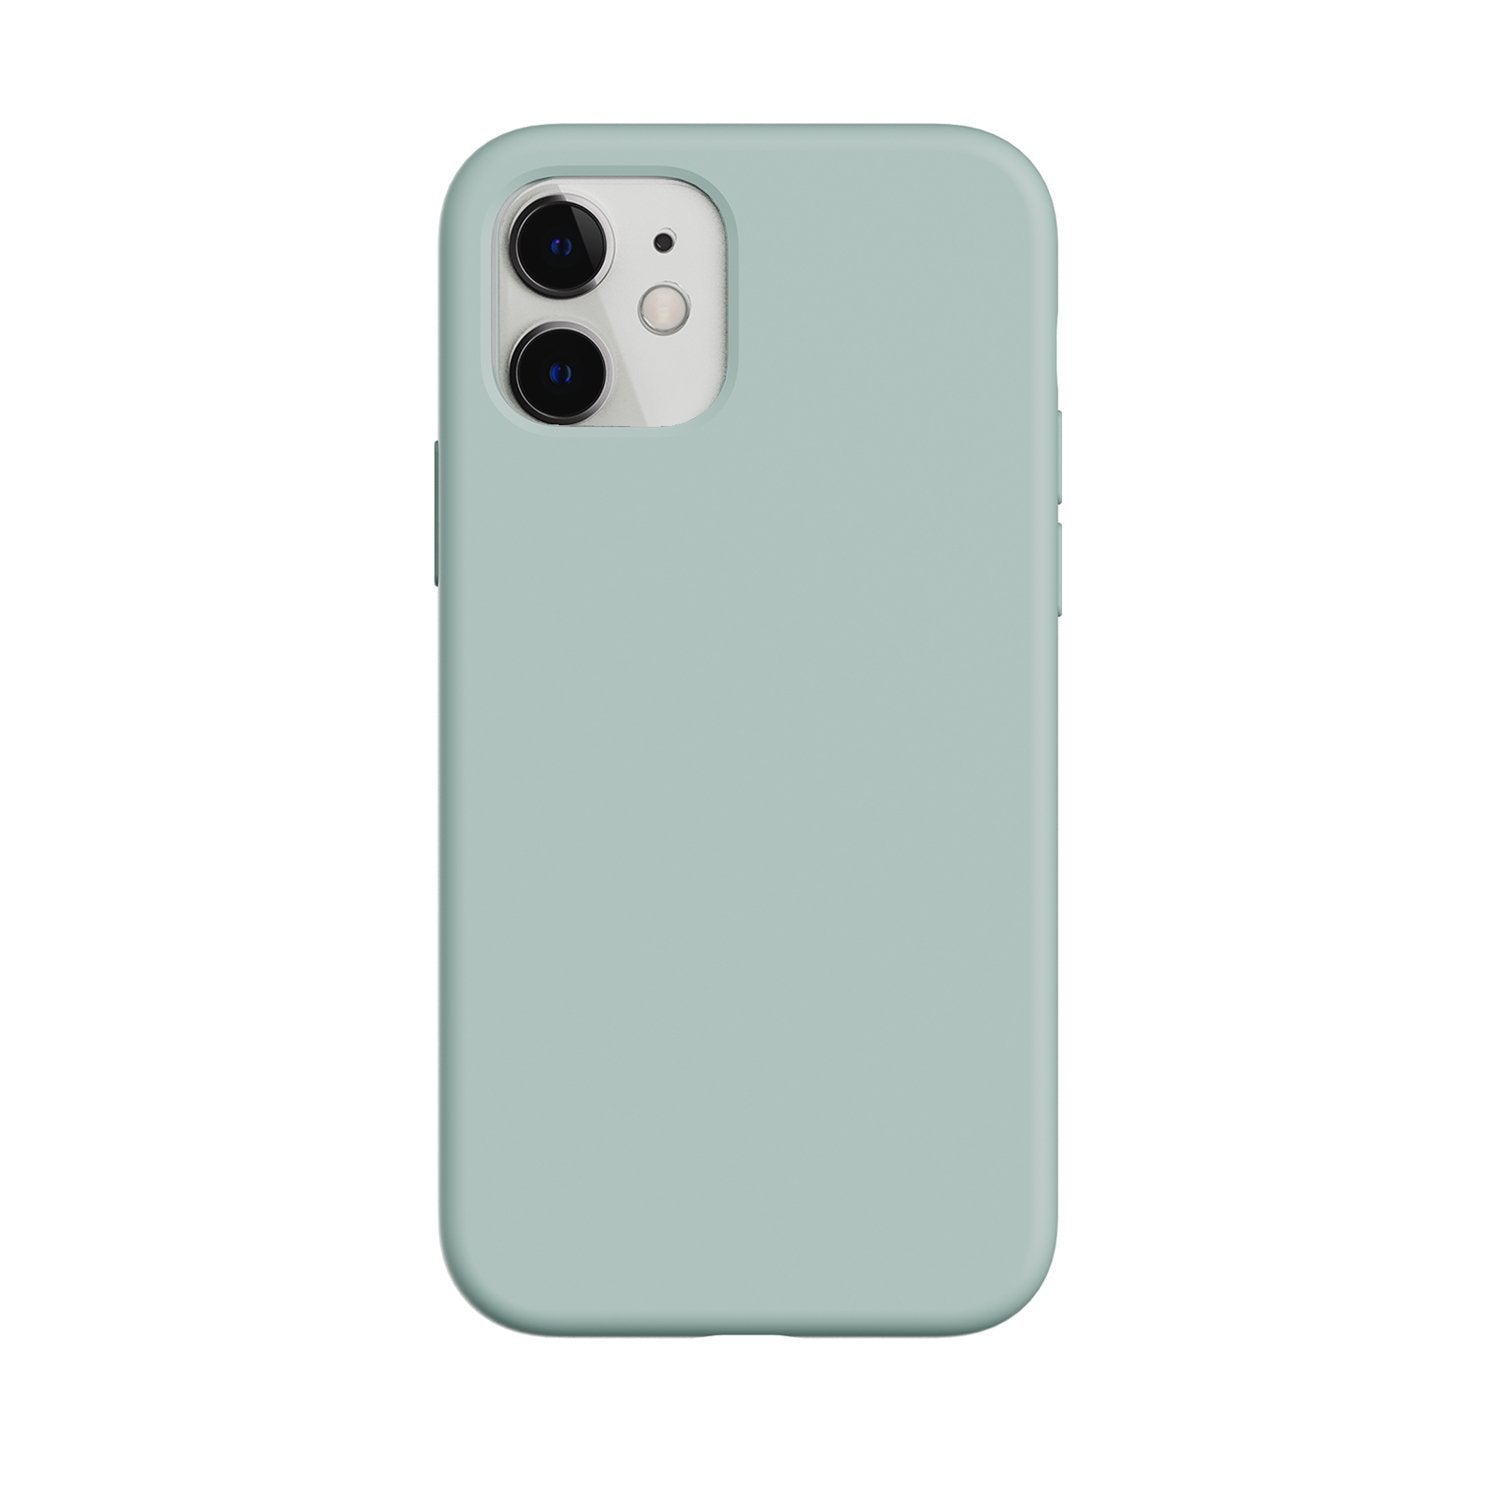 SwitchEasy Skin Case for iPhone 12 mini 5.4"(2020)